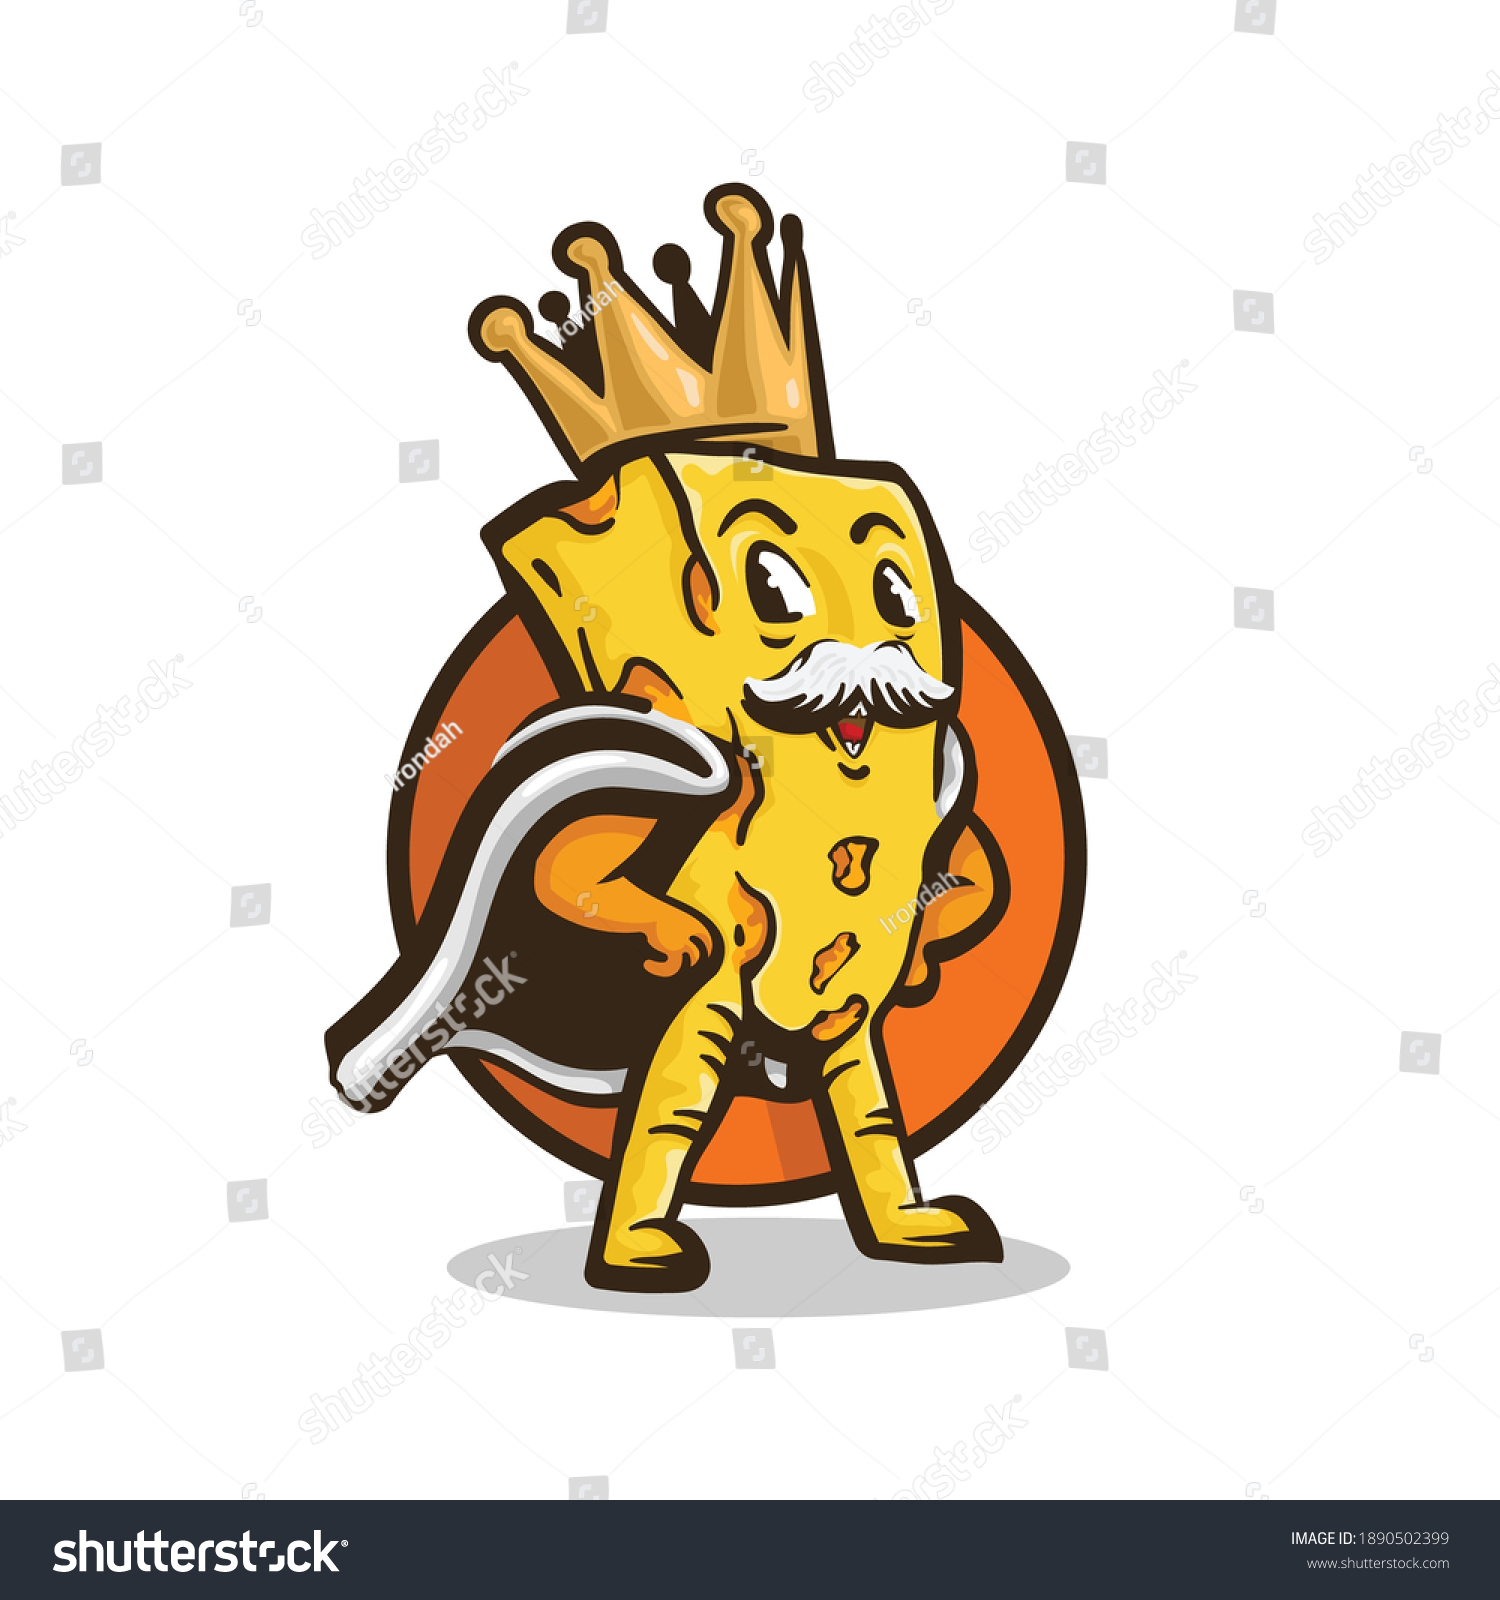 SVG of king cheese character logo, mascot logo. vector illustration background svg